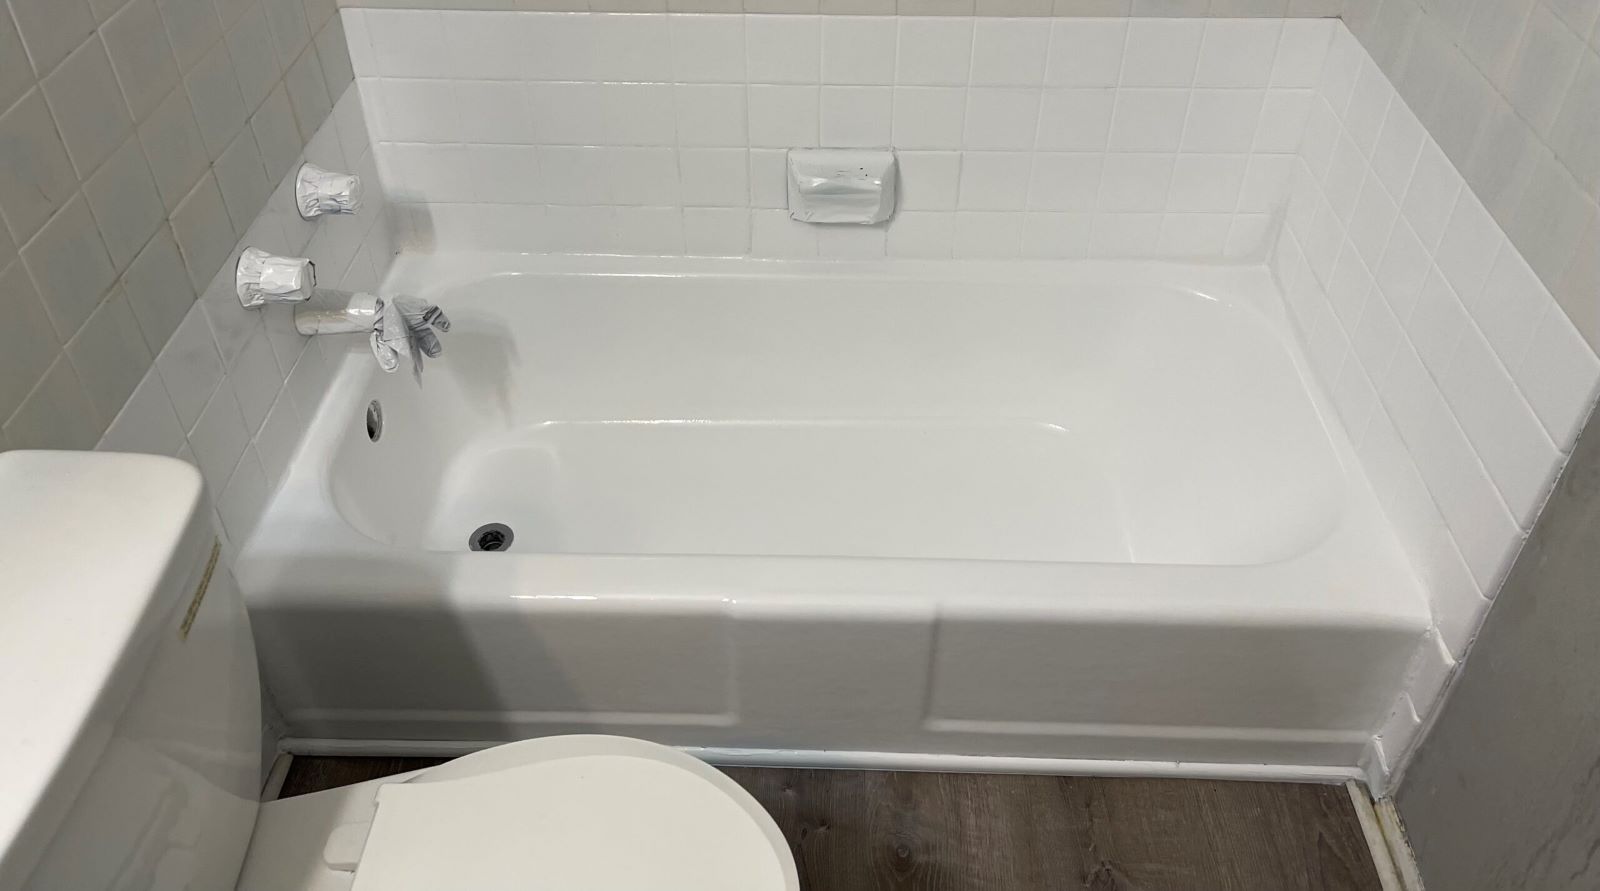 Affordable Bathtub Resurfacing Clayton, MO | Bathtub Refinishing in Clayton, MO | A New Look Resurfacing